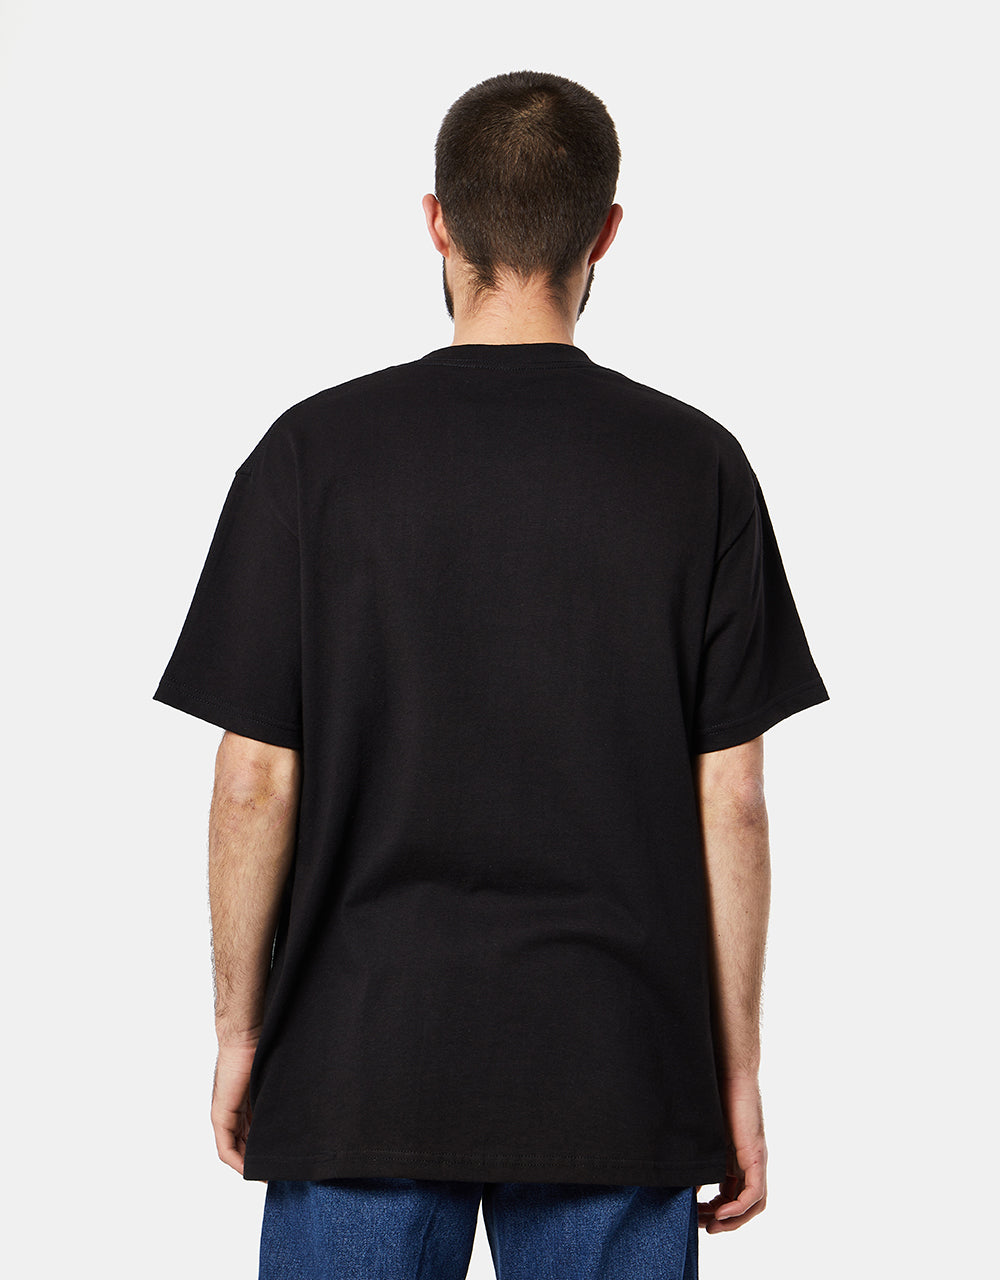 Quasi Headphase T-Shirt - Black